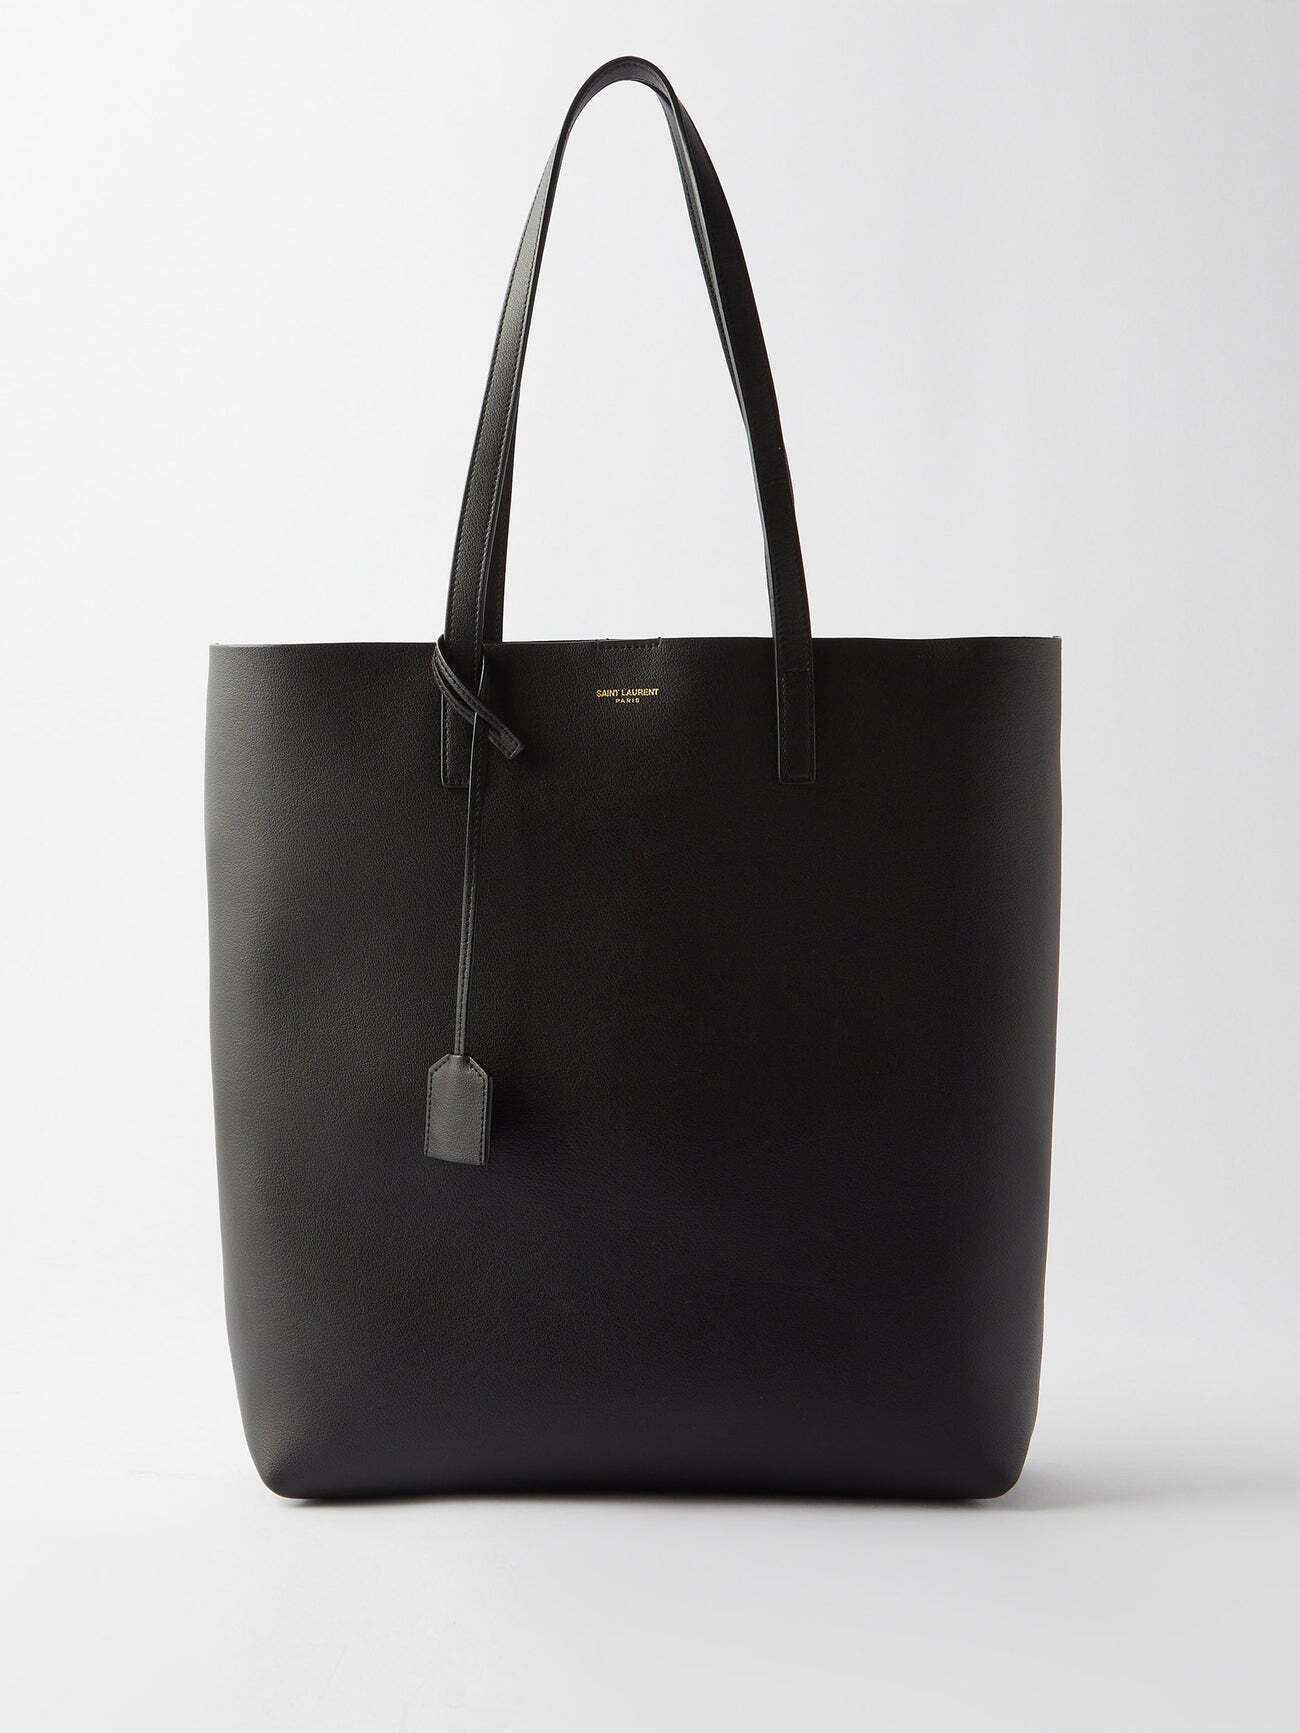 Saint Laurent - Shopping Leather Tote Bag - Womens - Black